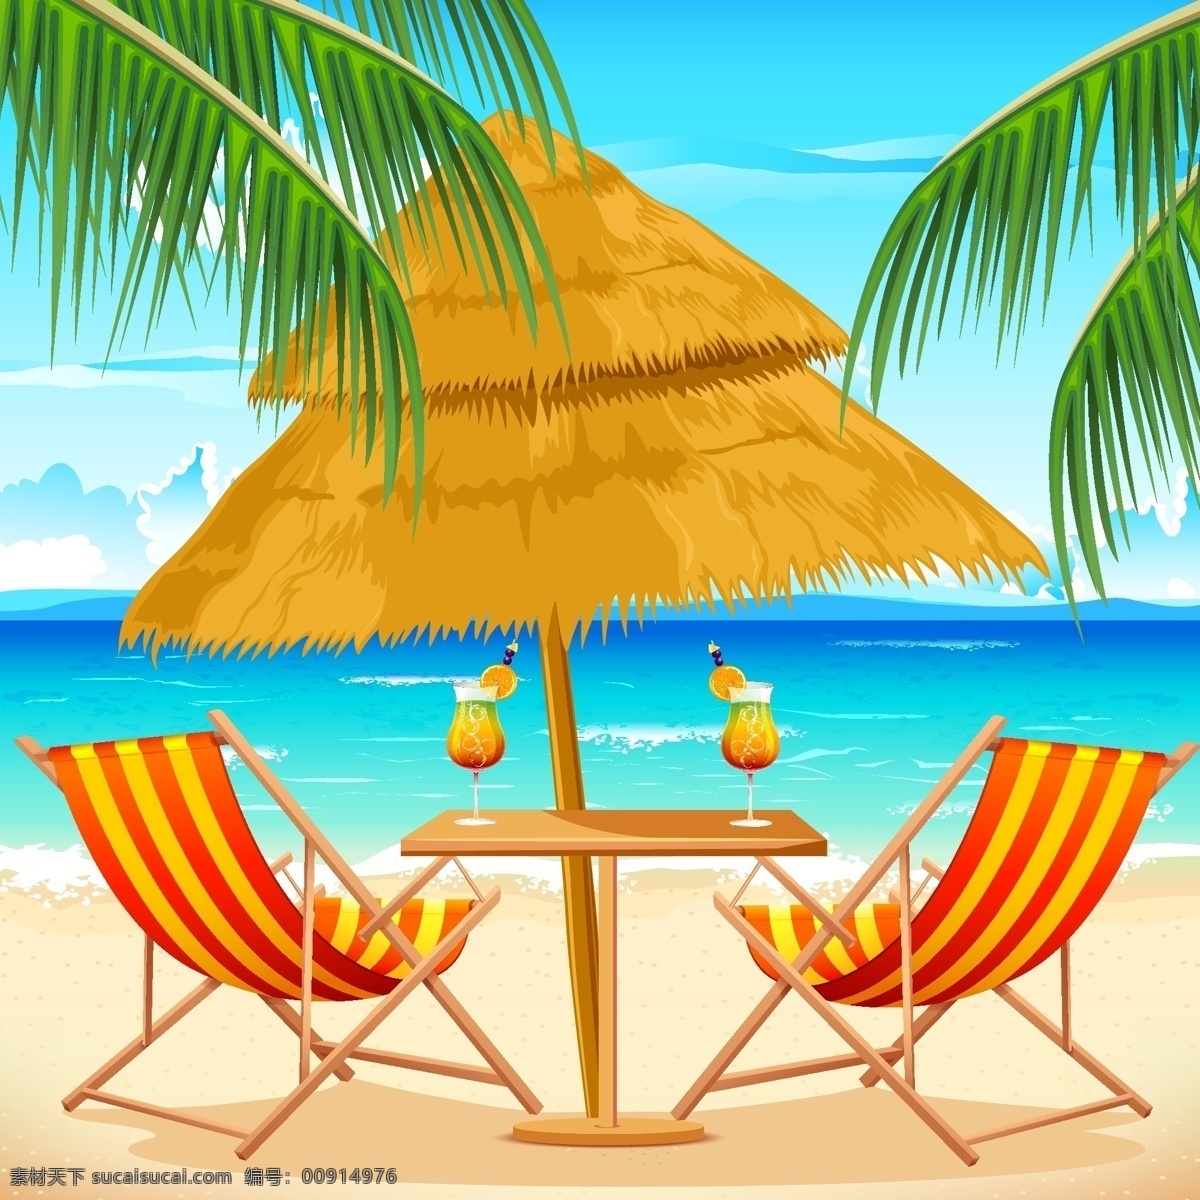 web 背景 插画 创意 高分辨率 海 海滩 海洋 鸡尾酒 病 媒 生物 时尚 免费 原始的 高质量 图形 质量 新鲜的 设计新的 ui元素 hd 元素 接口 详细的 热带地区 热带的 逃亡的 假期 假日 砂 伞 椅子 蓝色的 psd源文件